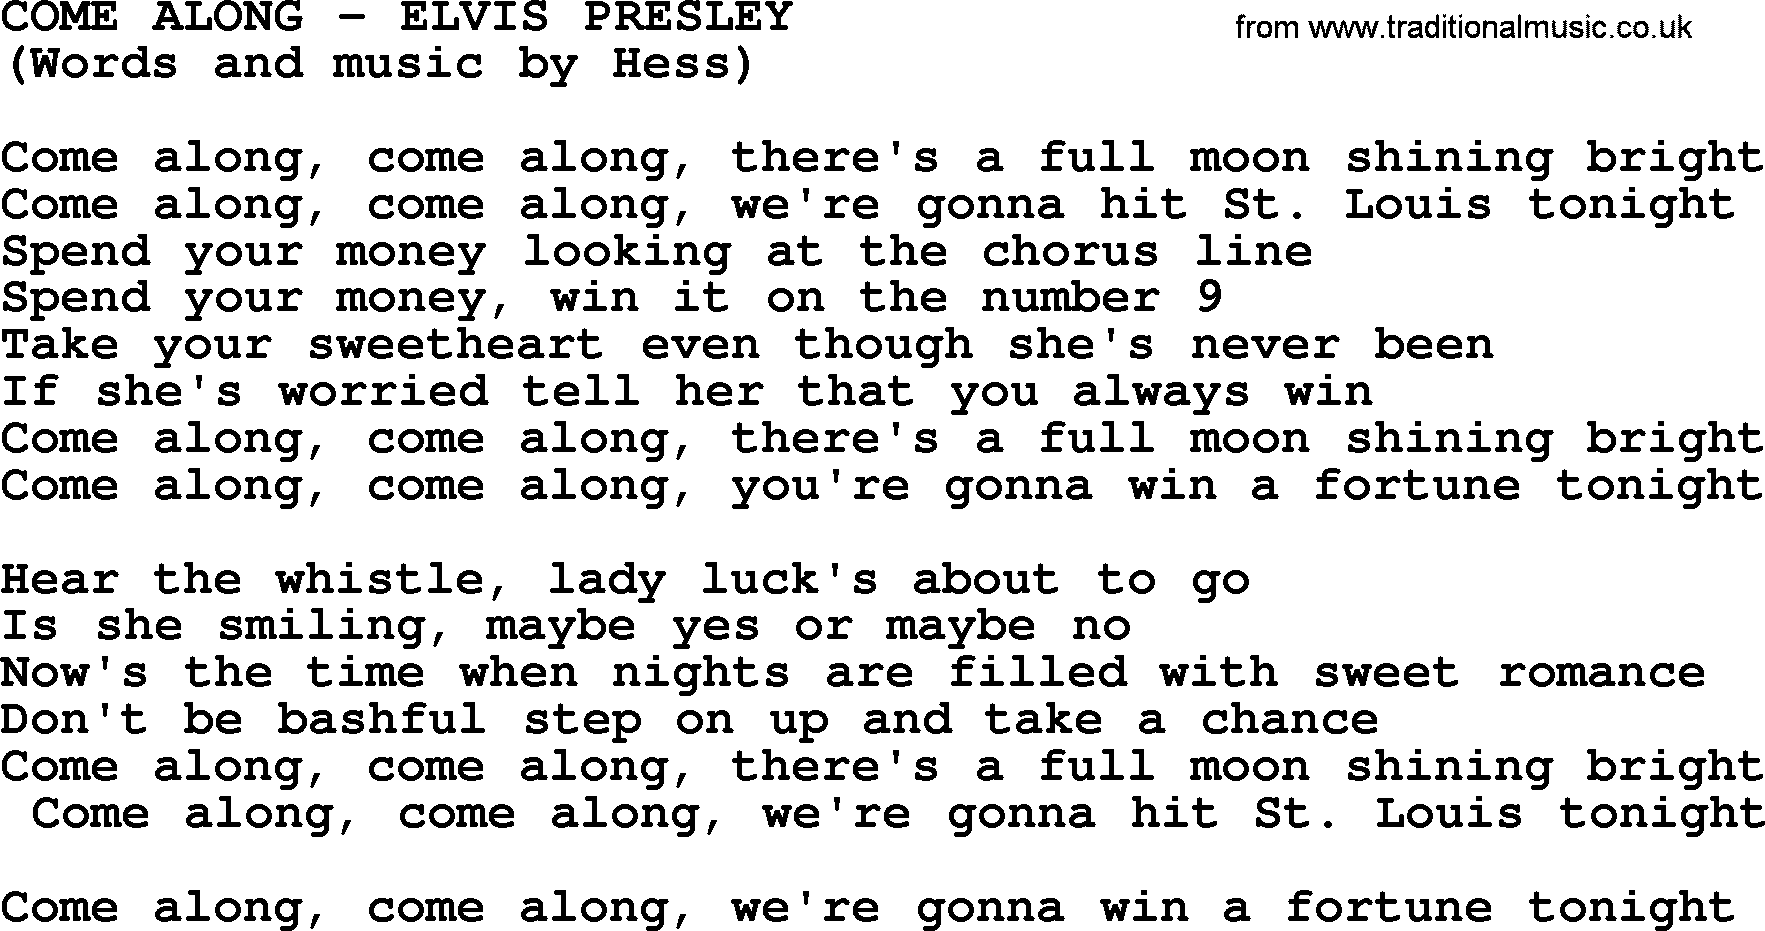 Elvis Presley song: Come Along lyrics